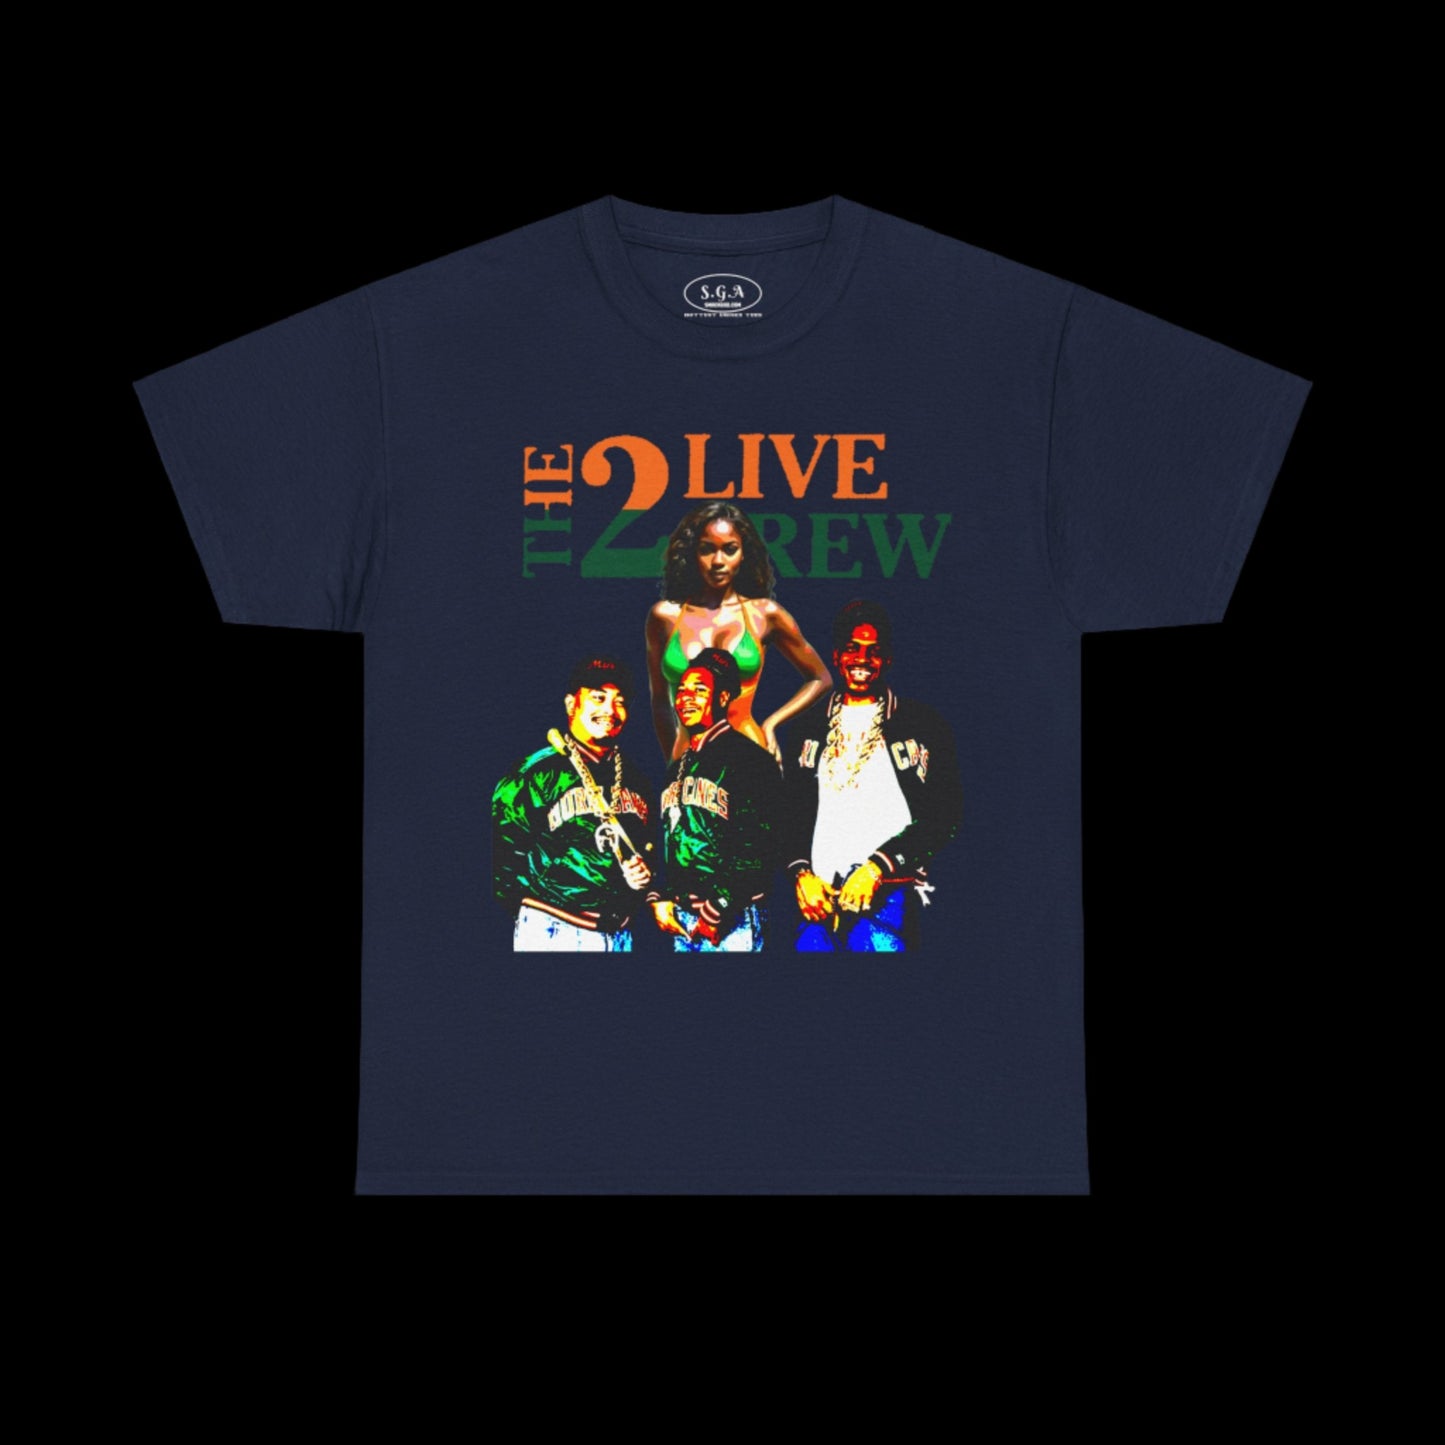 2 Live Crew T Shirt